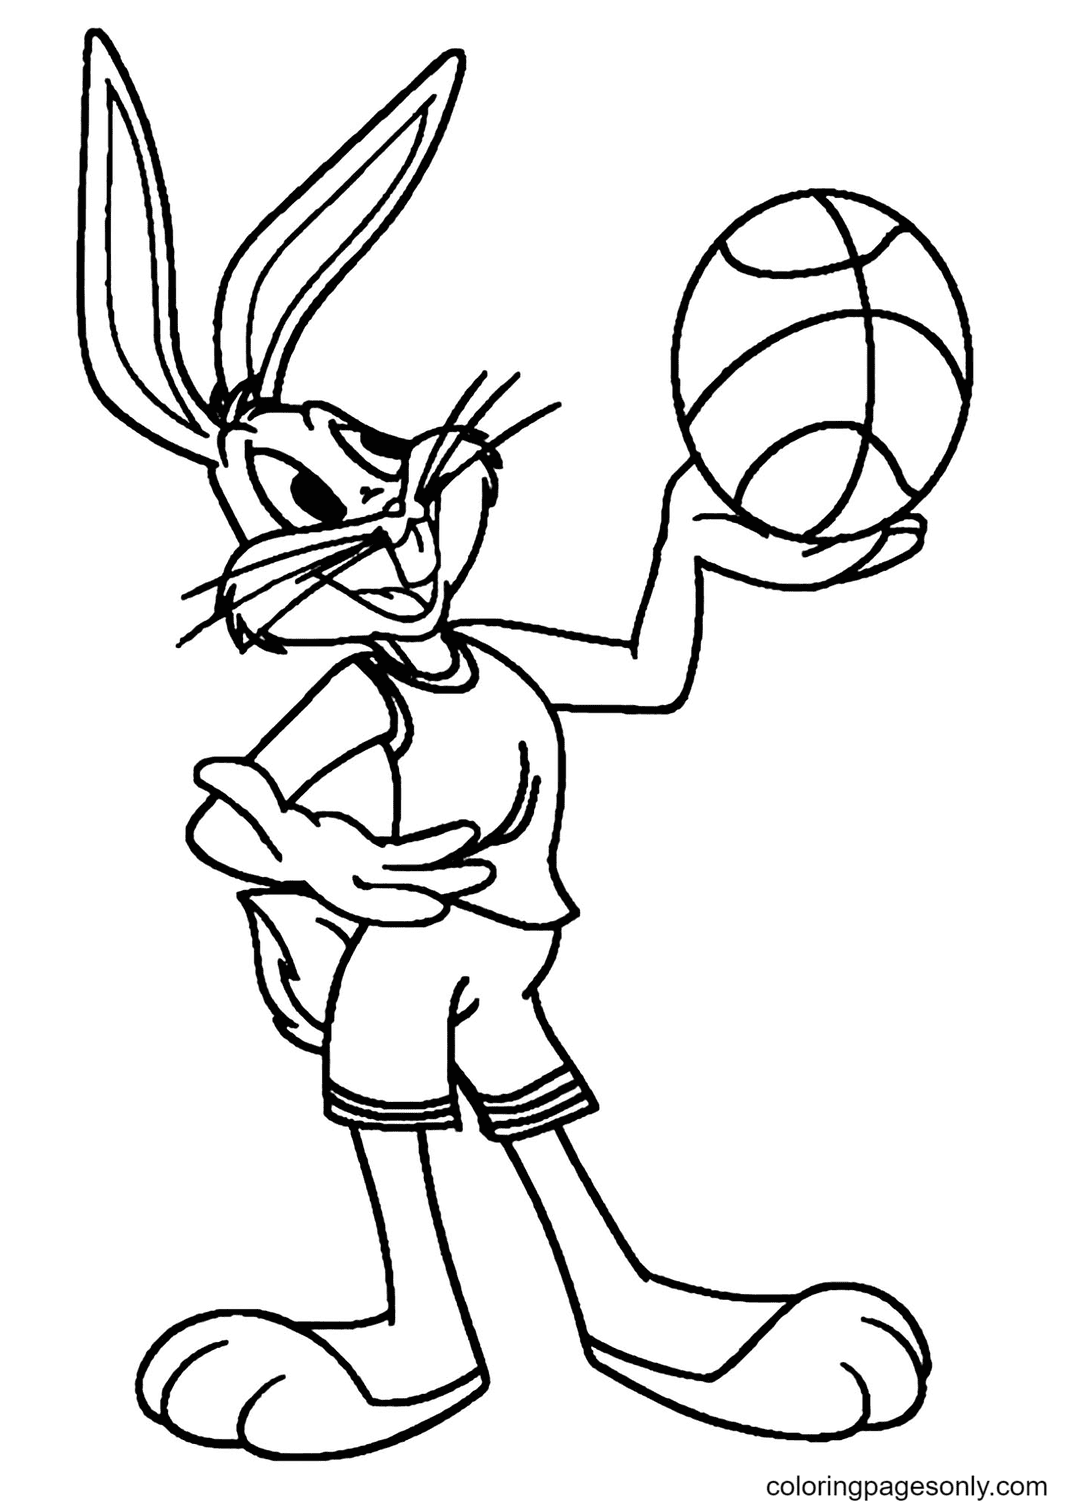 Bugs-Bunny-Holding-a-Basketball